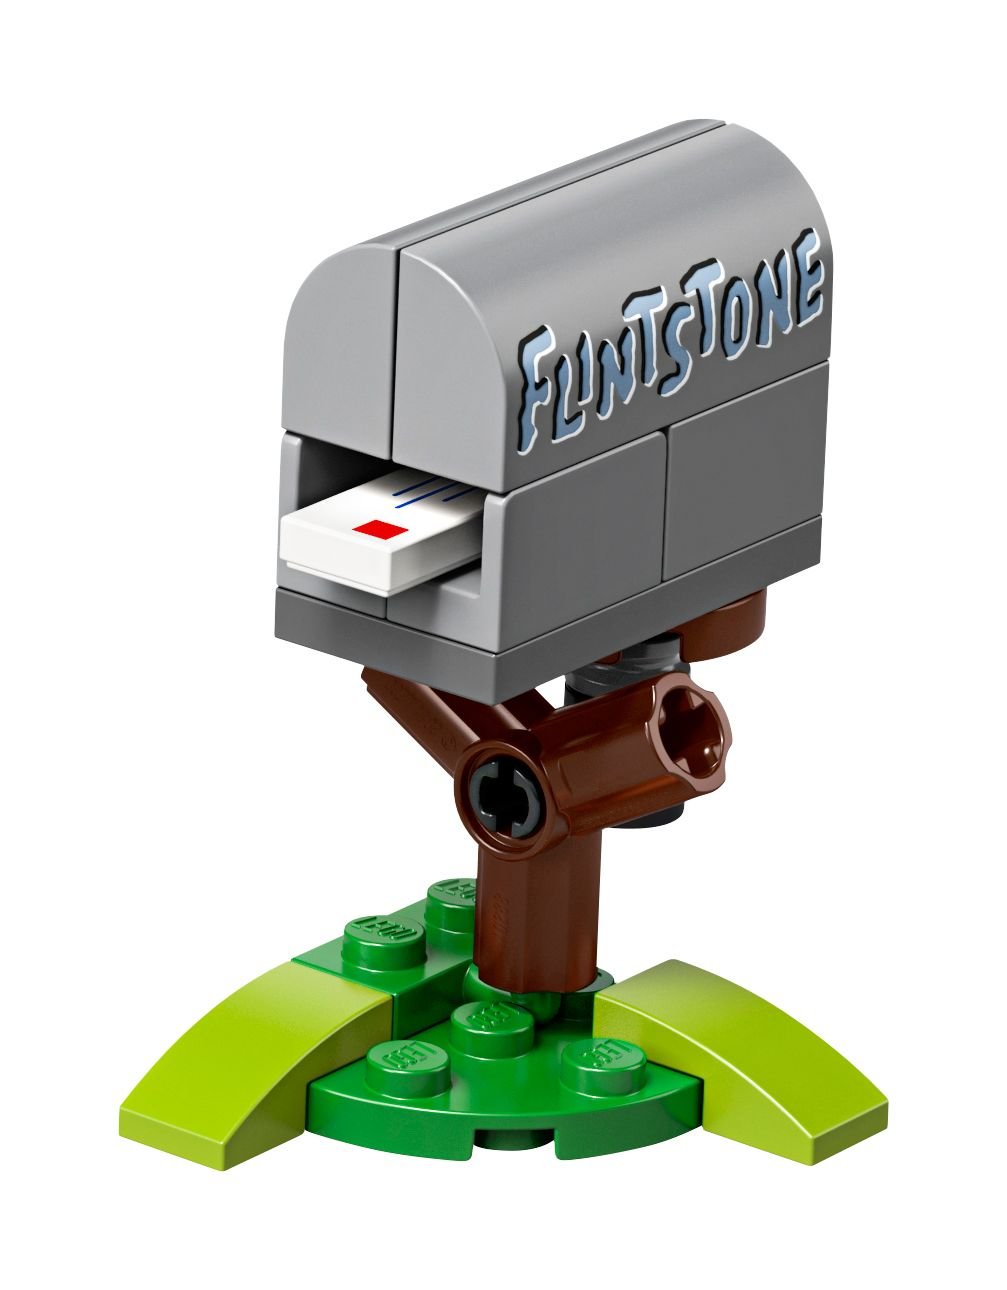 LEGO Ideas 21316 The Flintstones - Familie Feuerstein LEGO_21316_alt11.jpg